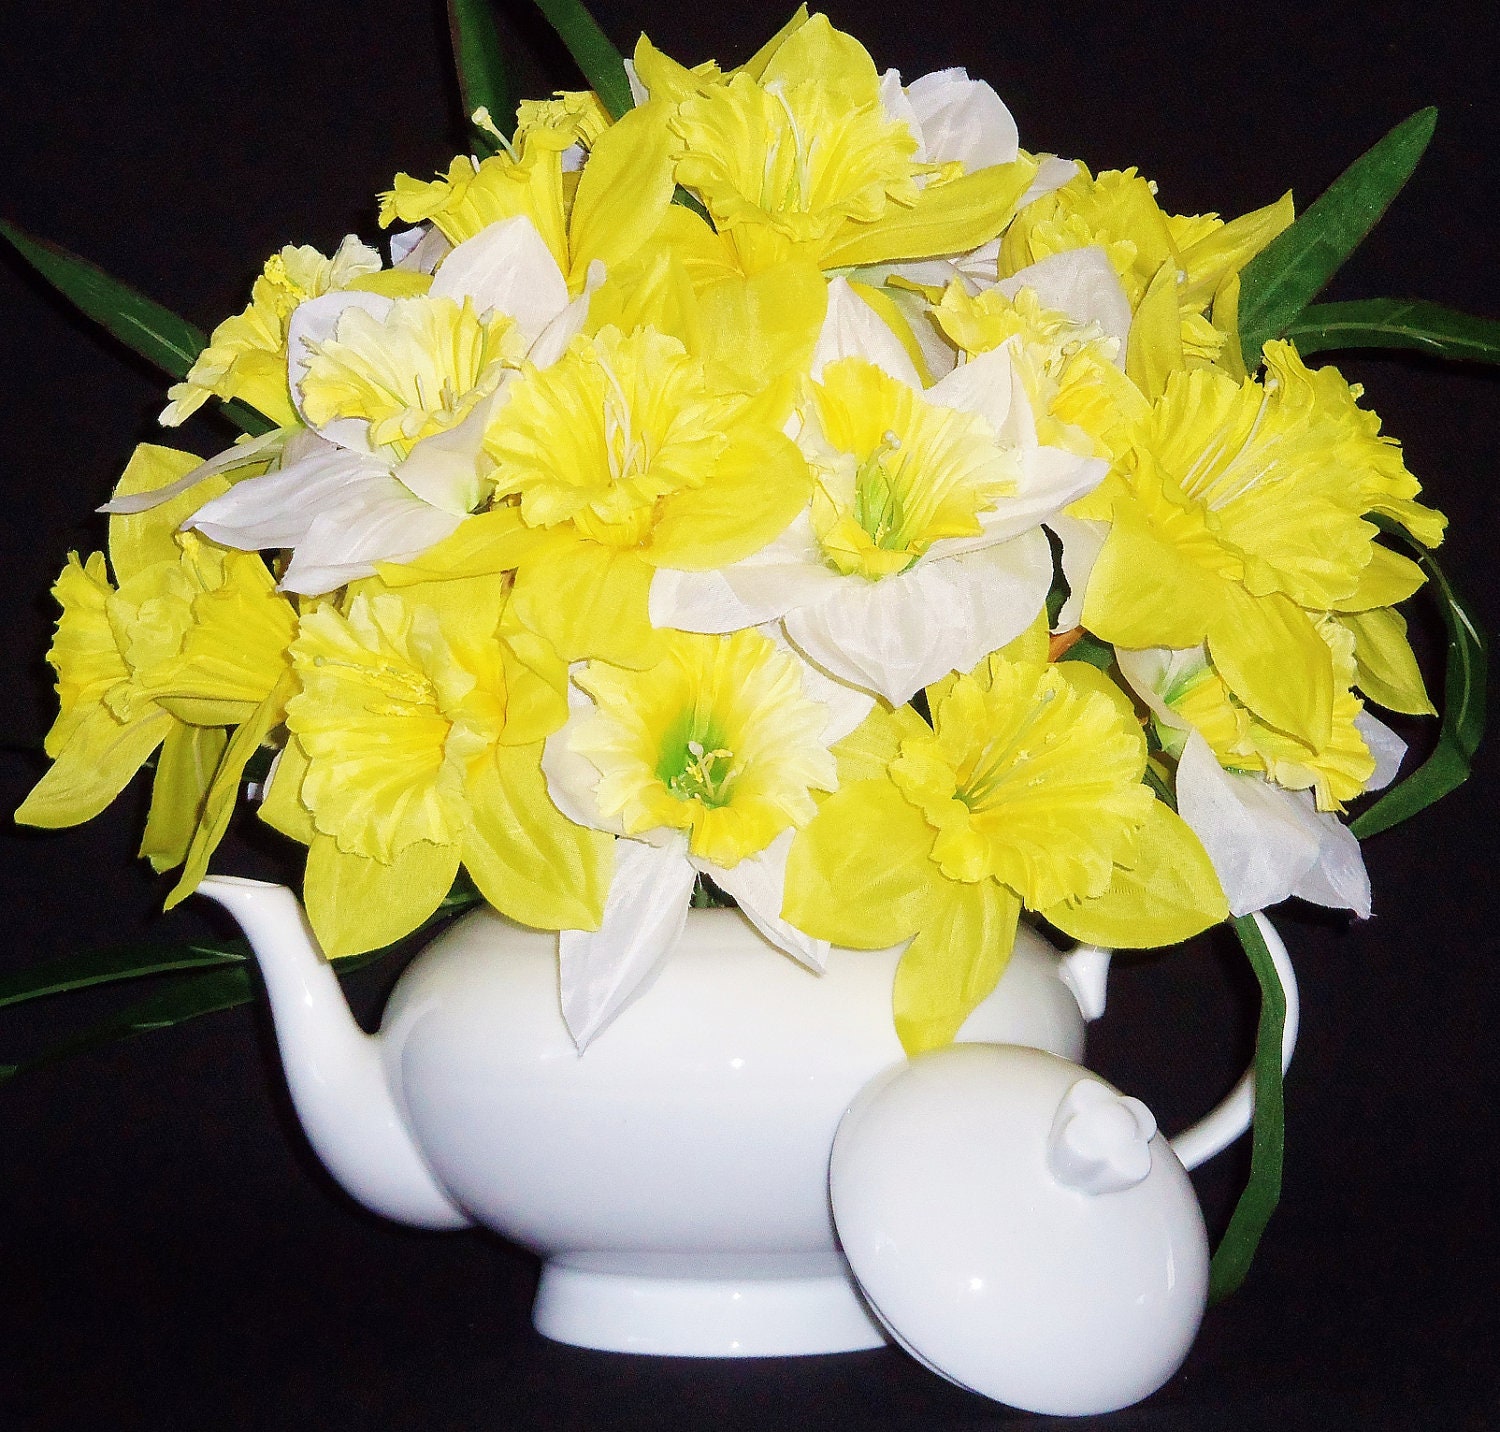 White Daffodil Flower